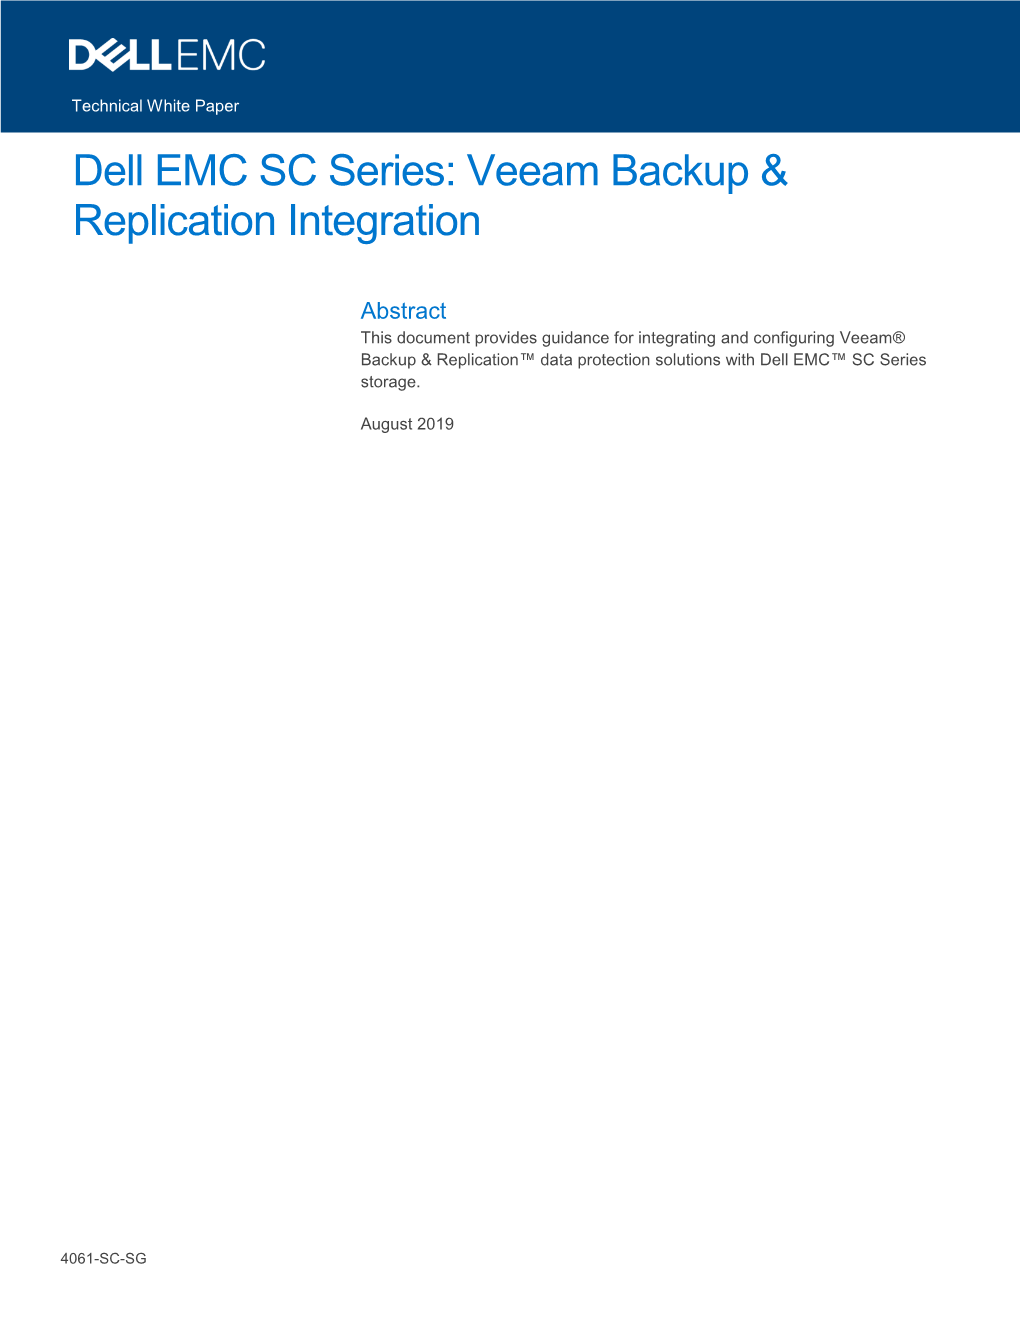 Dell EMC SC Series: Veeam Backup and Replication Integration